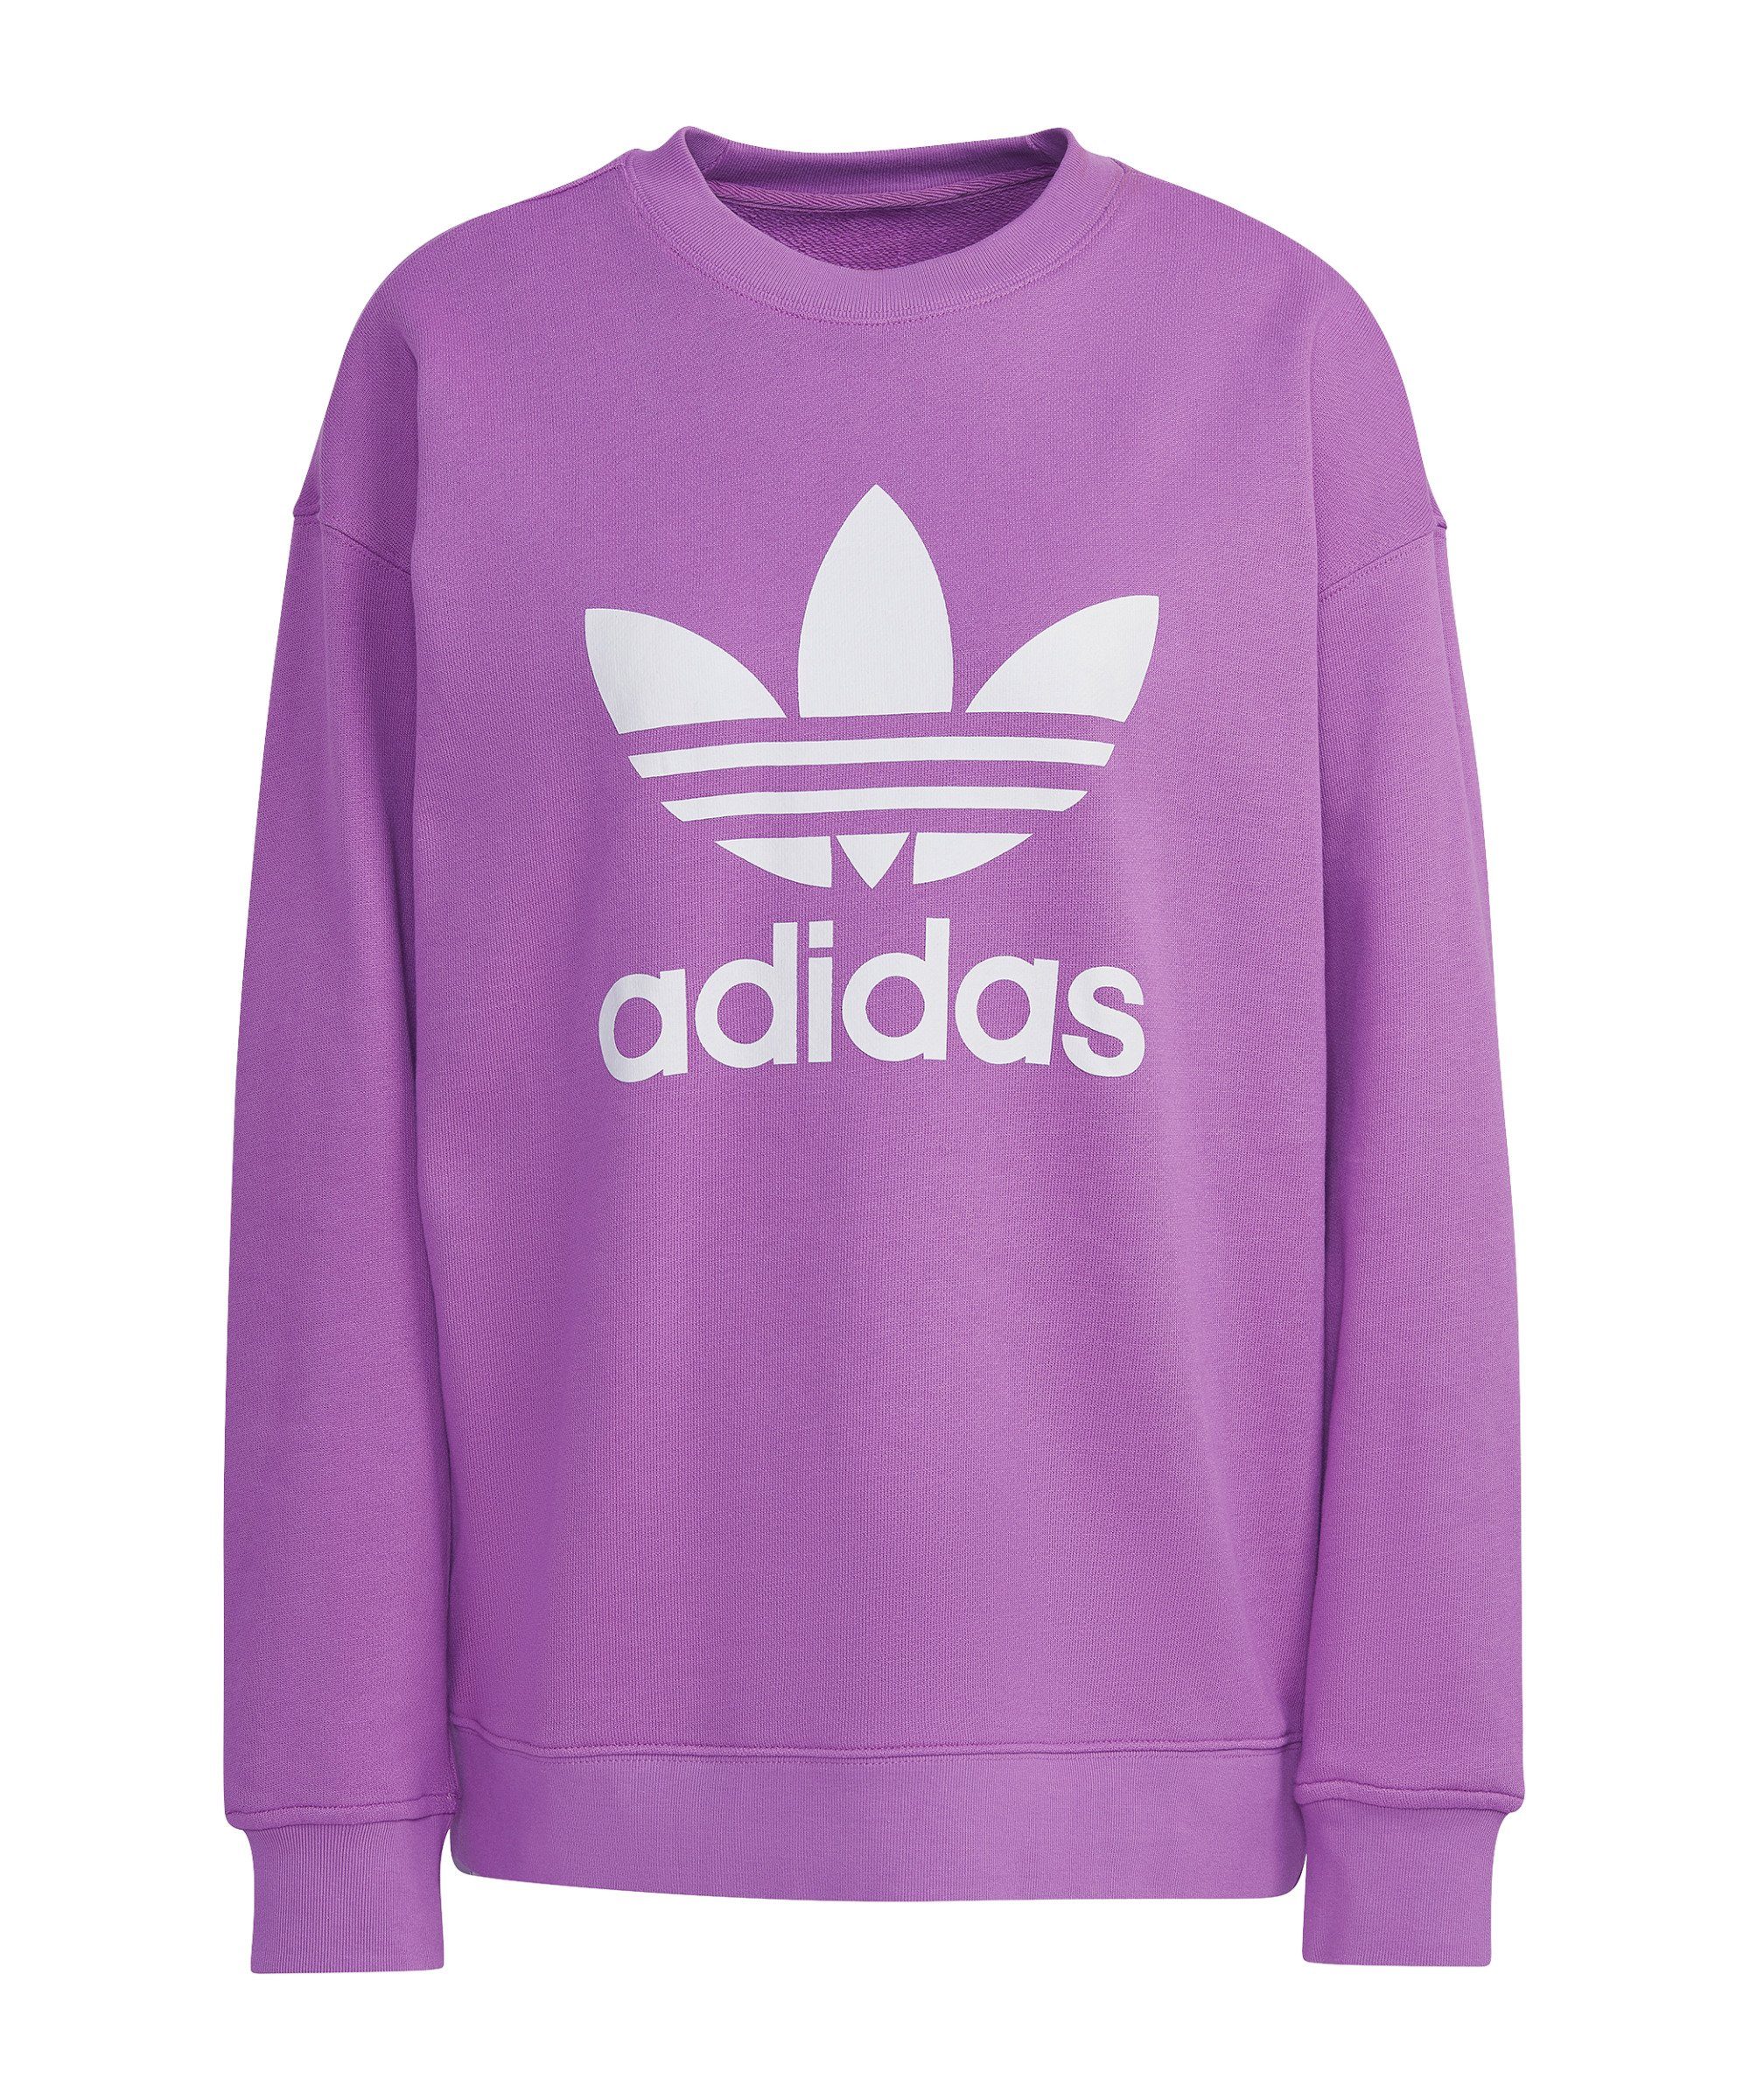 adidas Originals Sweater Trefoil Sweatshirt Damen lila